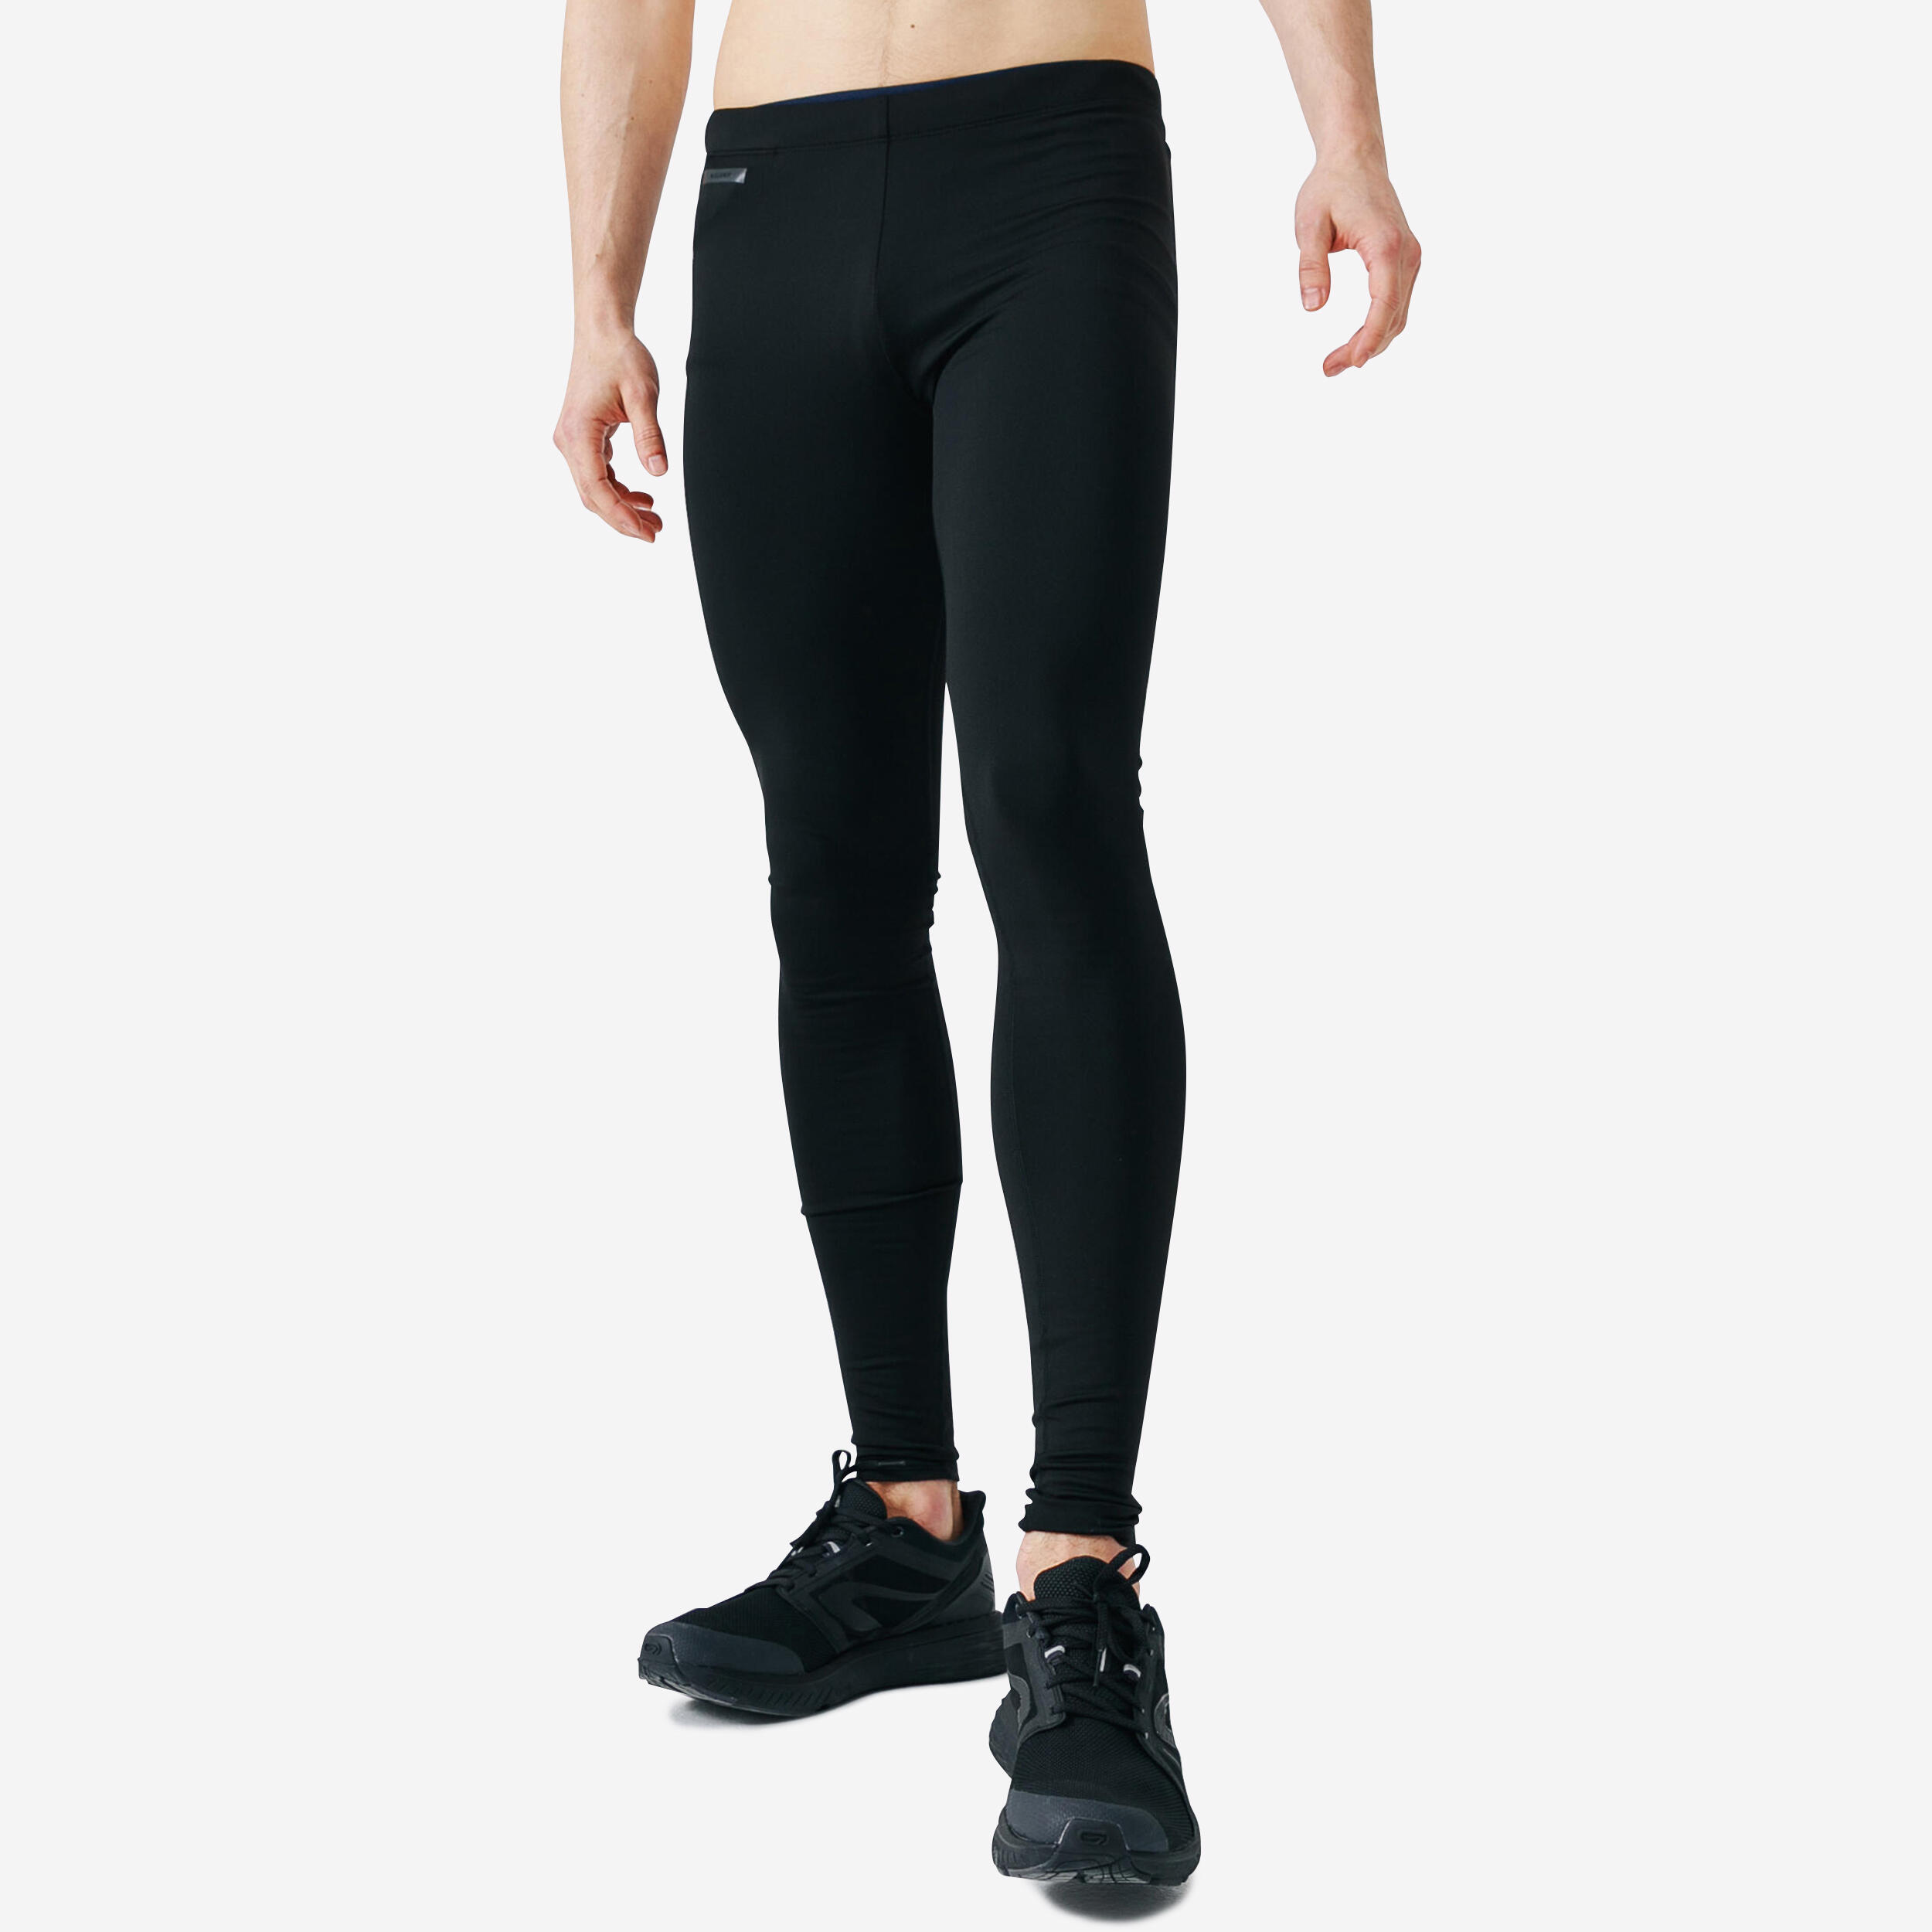 Buy Men's Running Breathable Long Tights Dry - Black Online | Decathlon